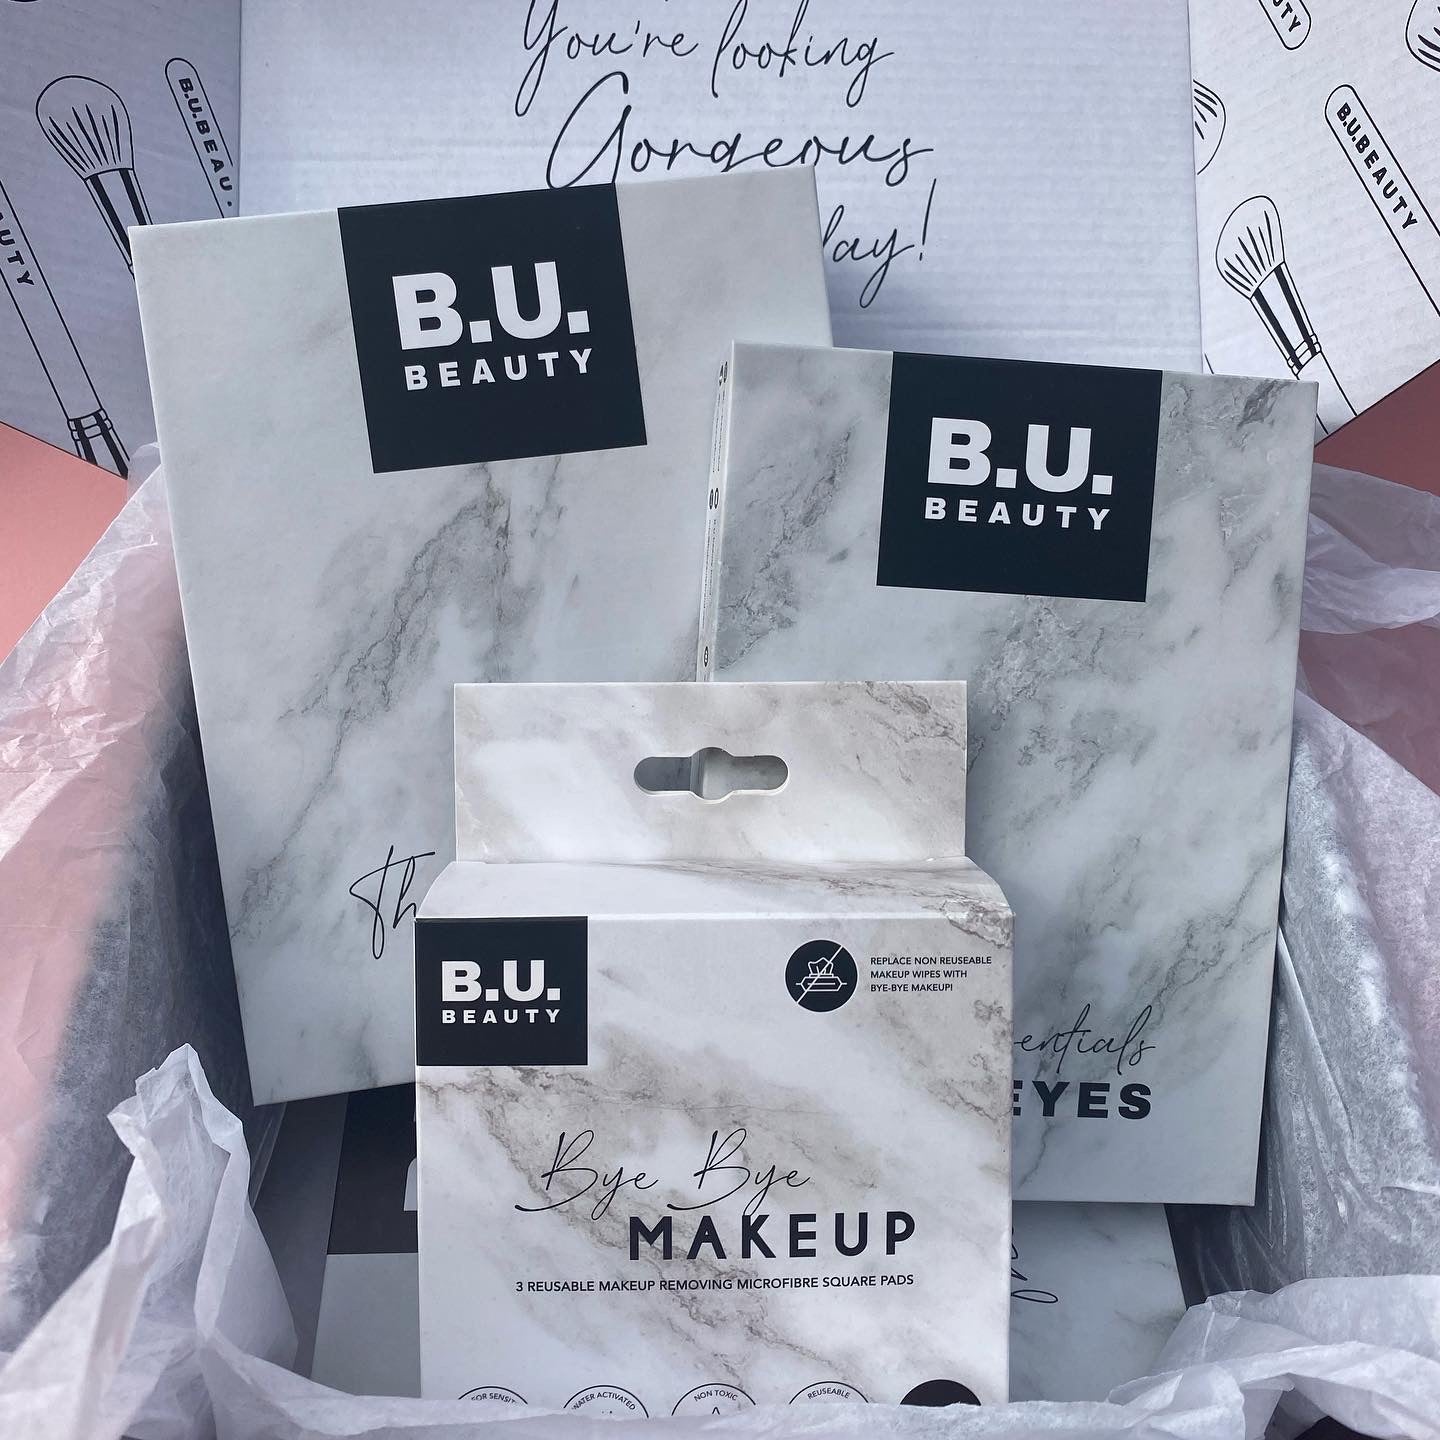 makeup tools by B.U. Beauty Brand